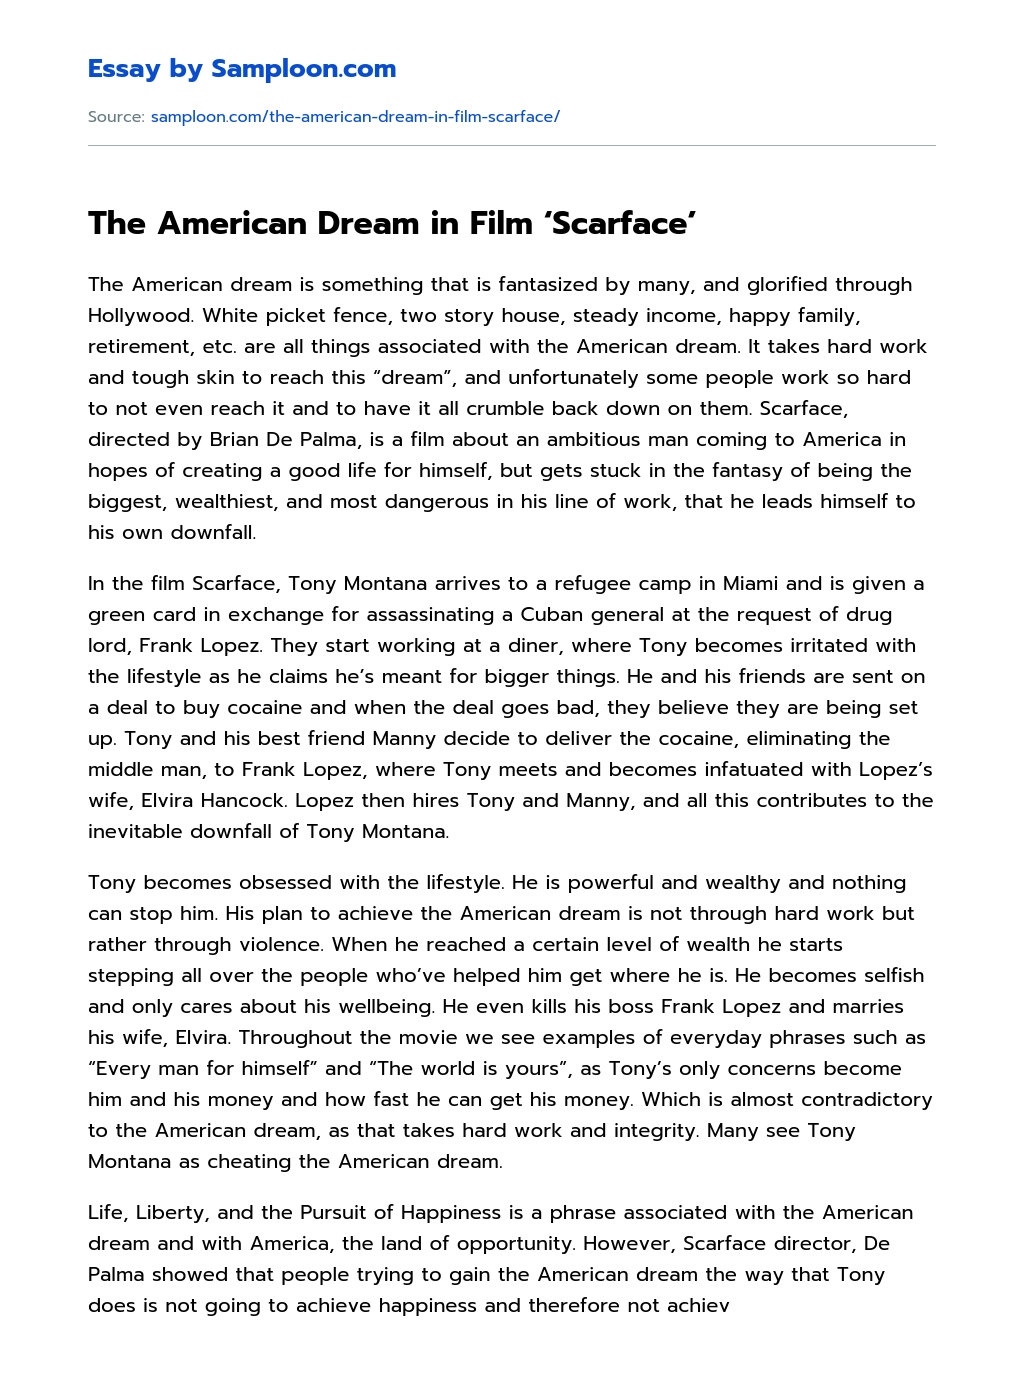 The American Dream in Film ‘Scarface’ essay